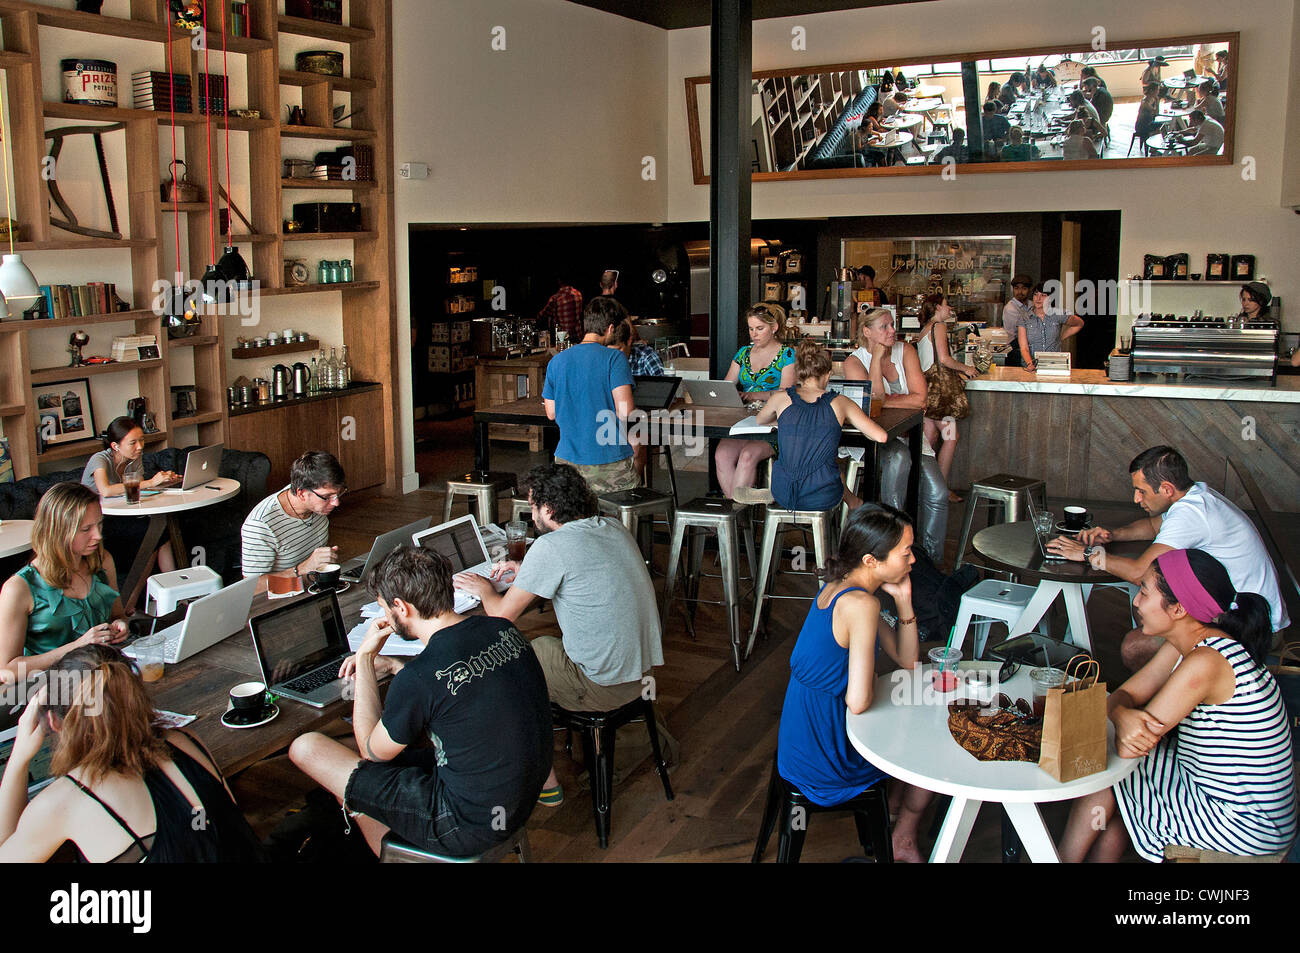 TOBY'S ESTATE COFFEE, Brooklyn - Williamsburg - Restaurant Reviews, Photos  & Phone Number - Tripadvisor